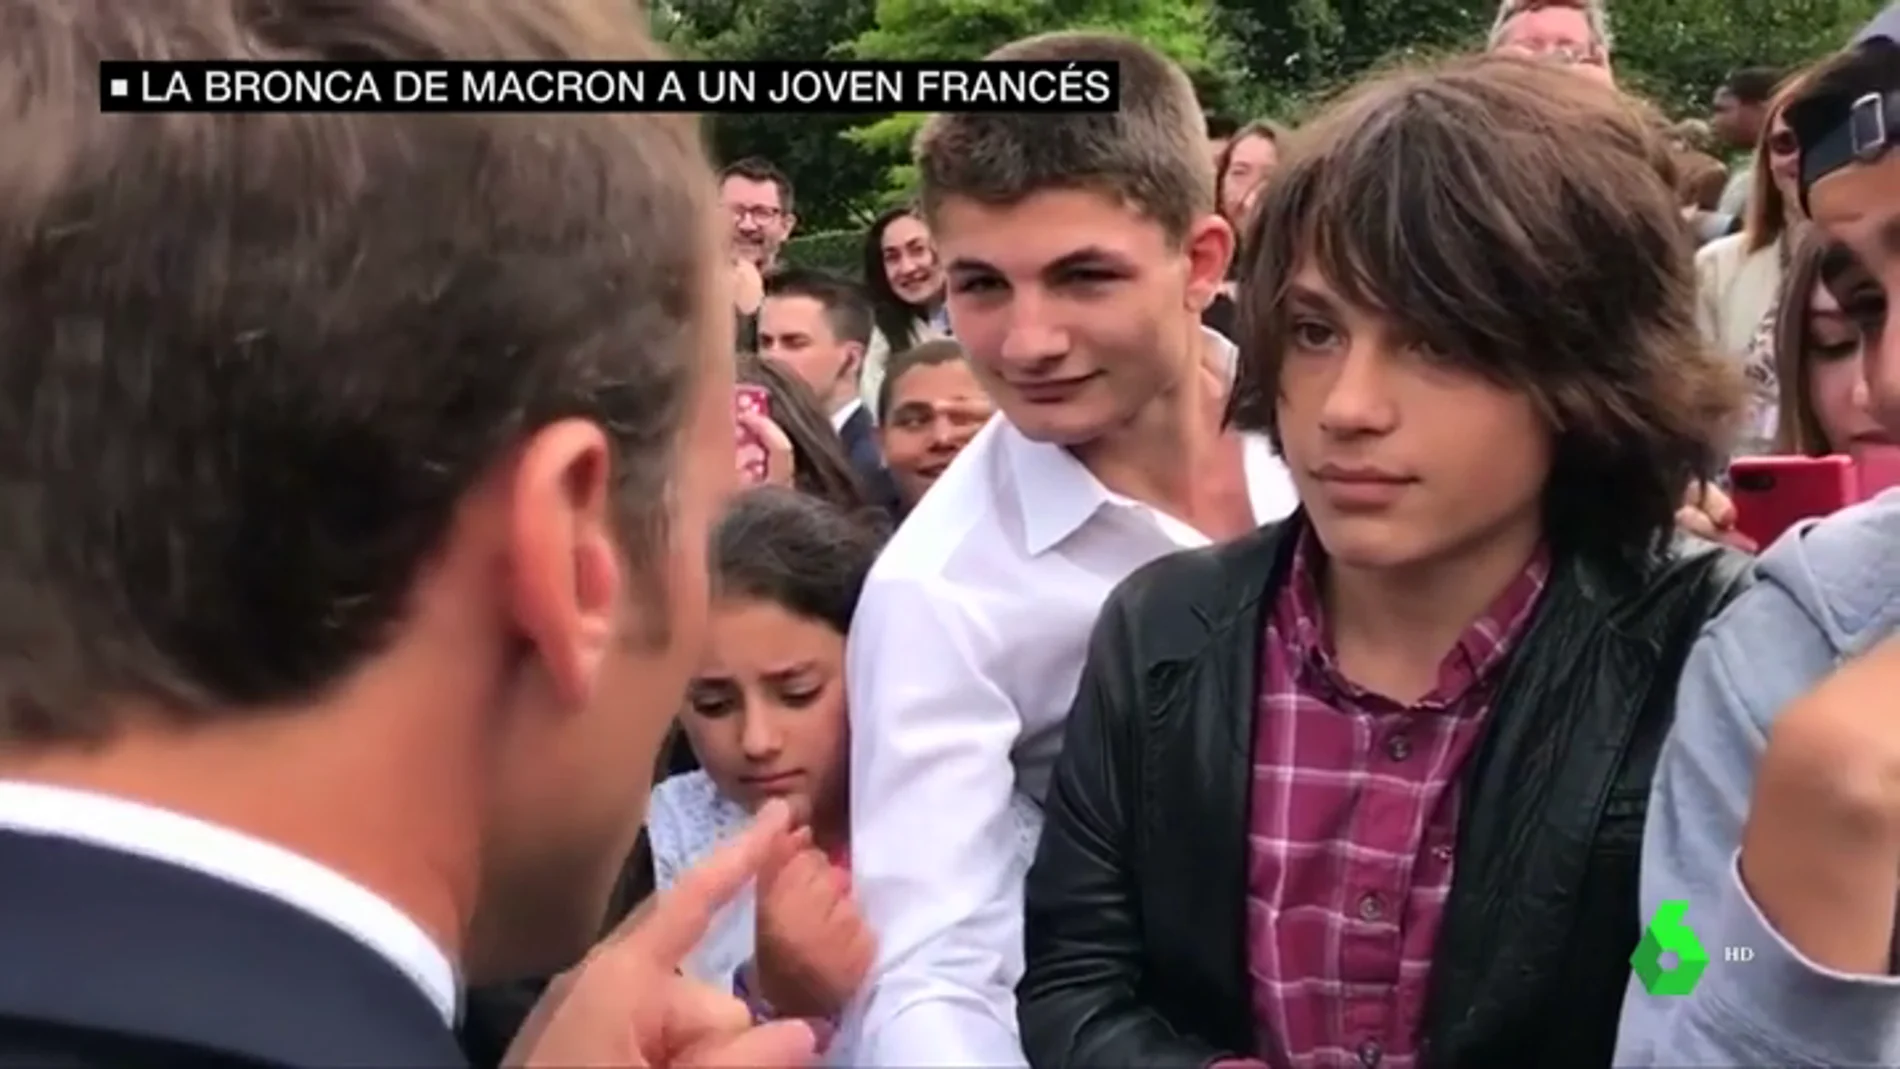 El joven al que abroncó Macron